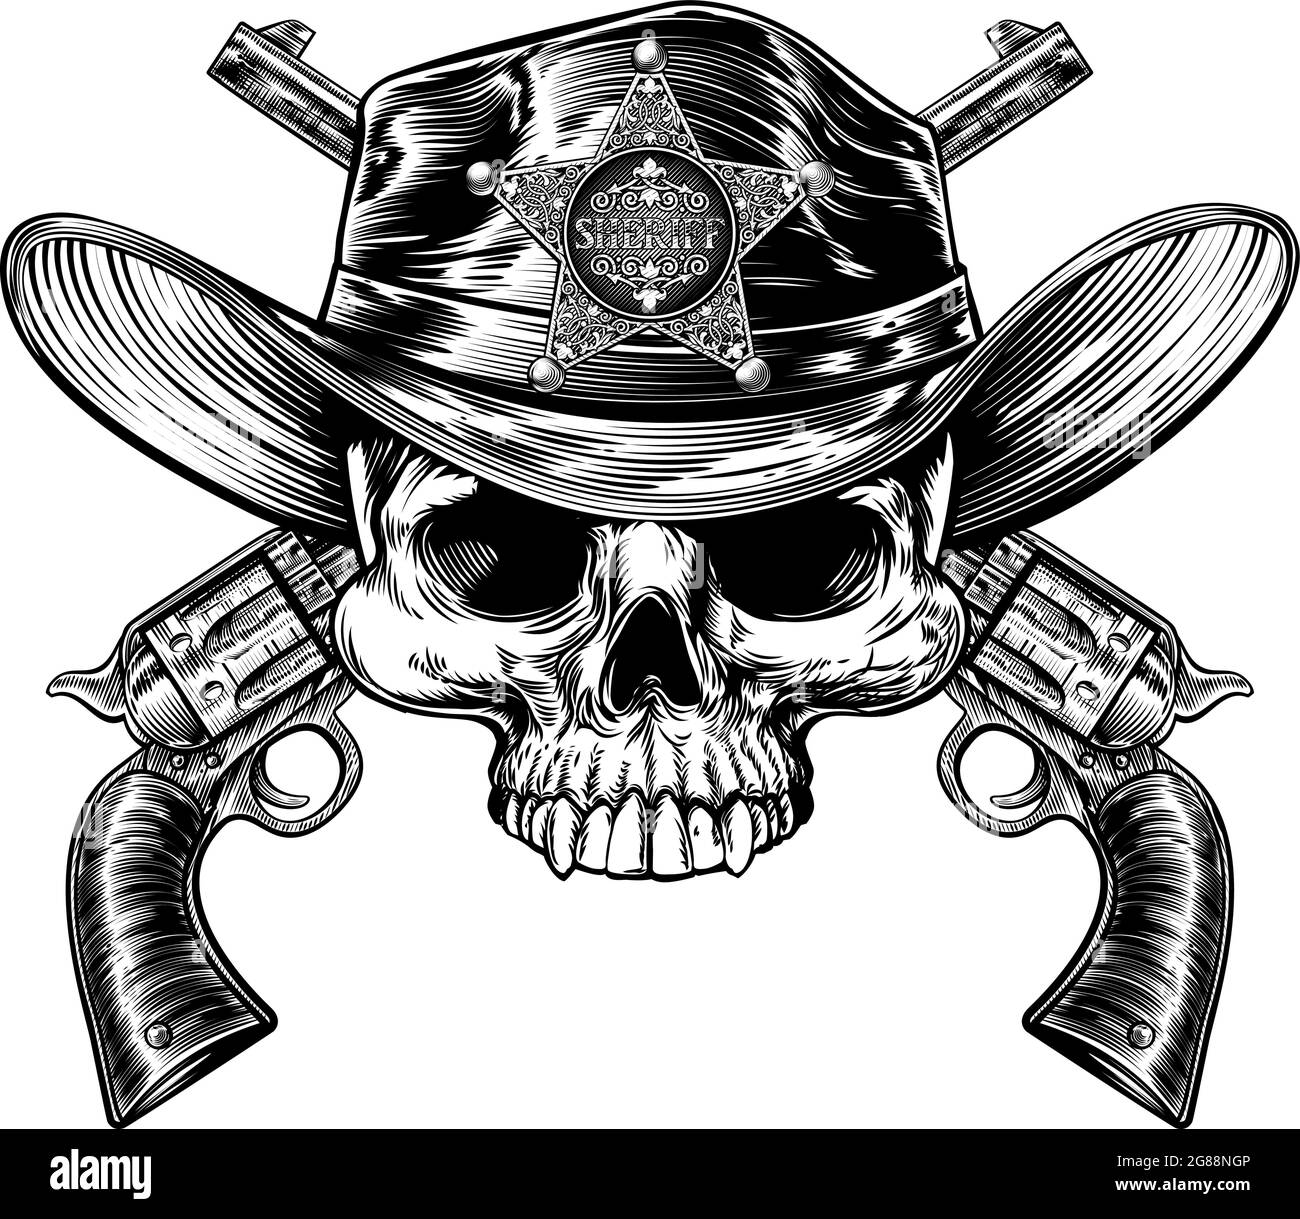 Skull and Crossed Pistols Sheriff Stock Vector